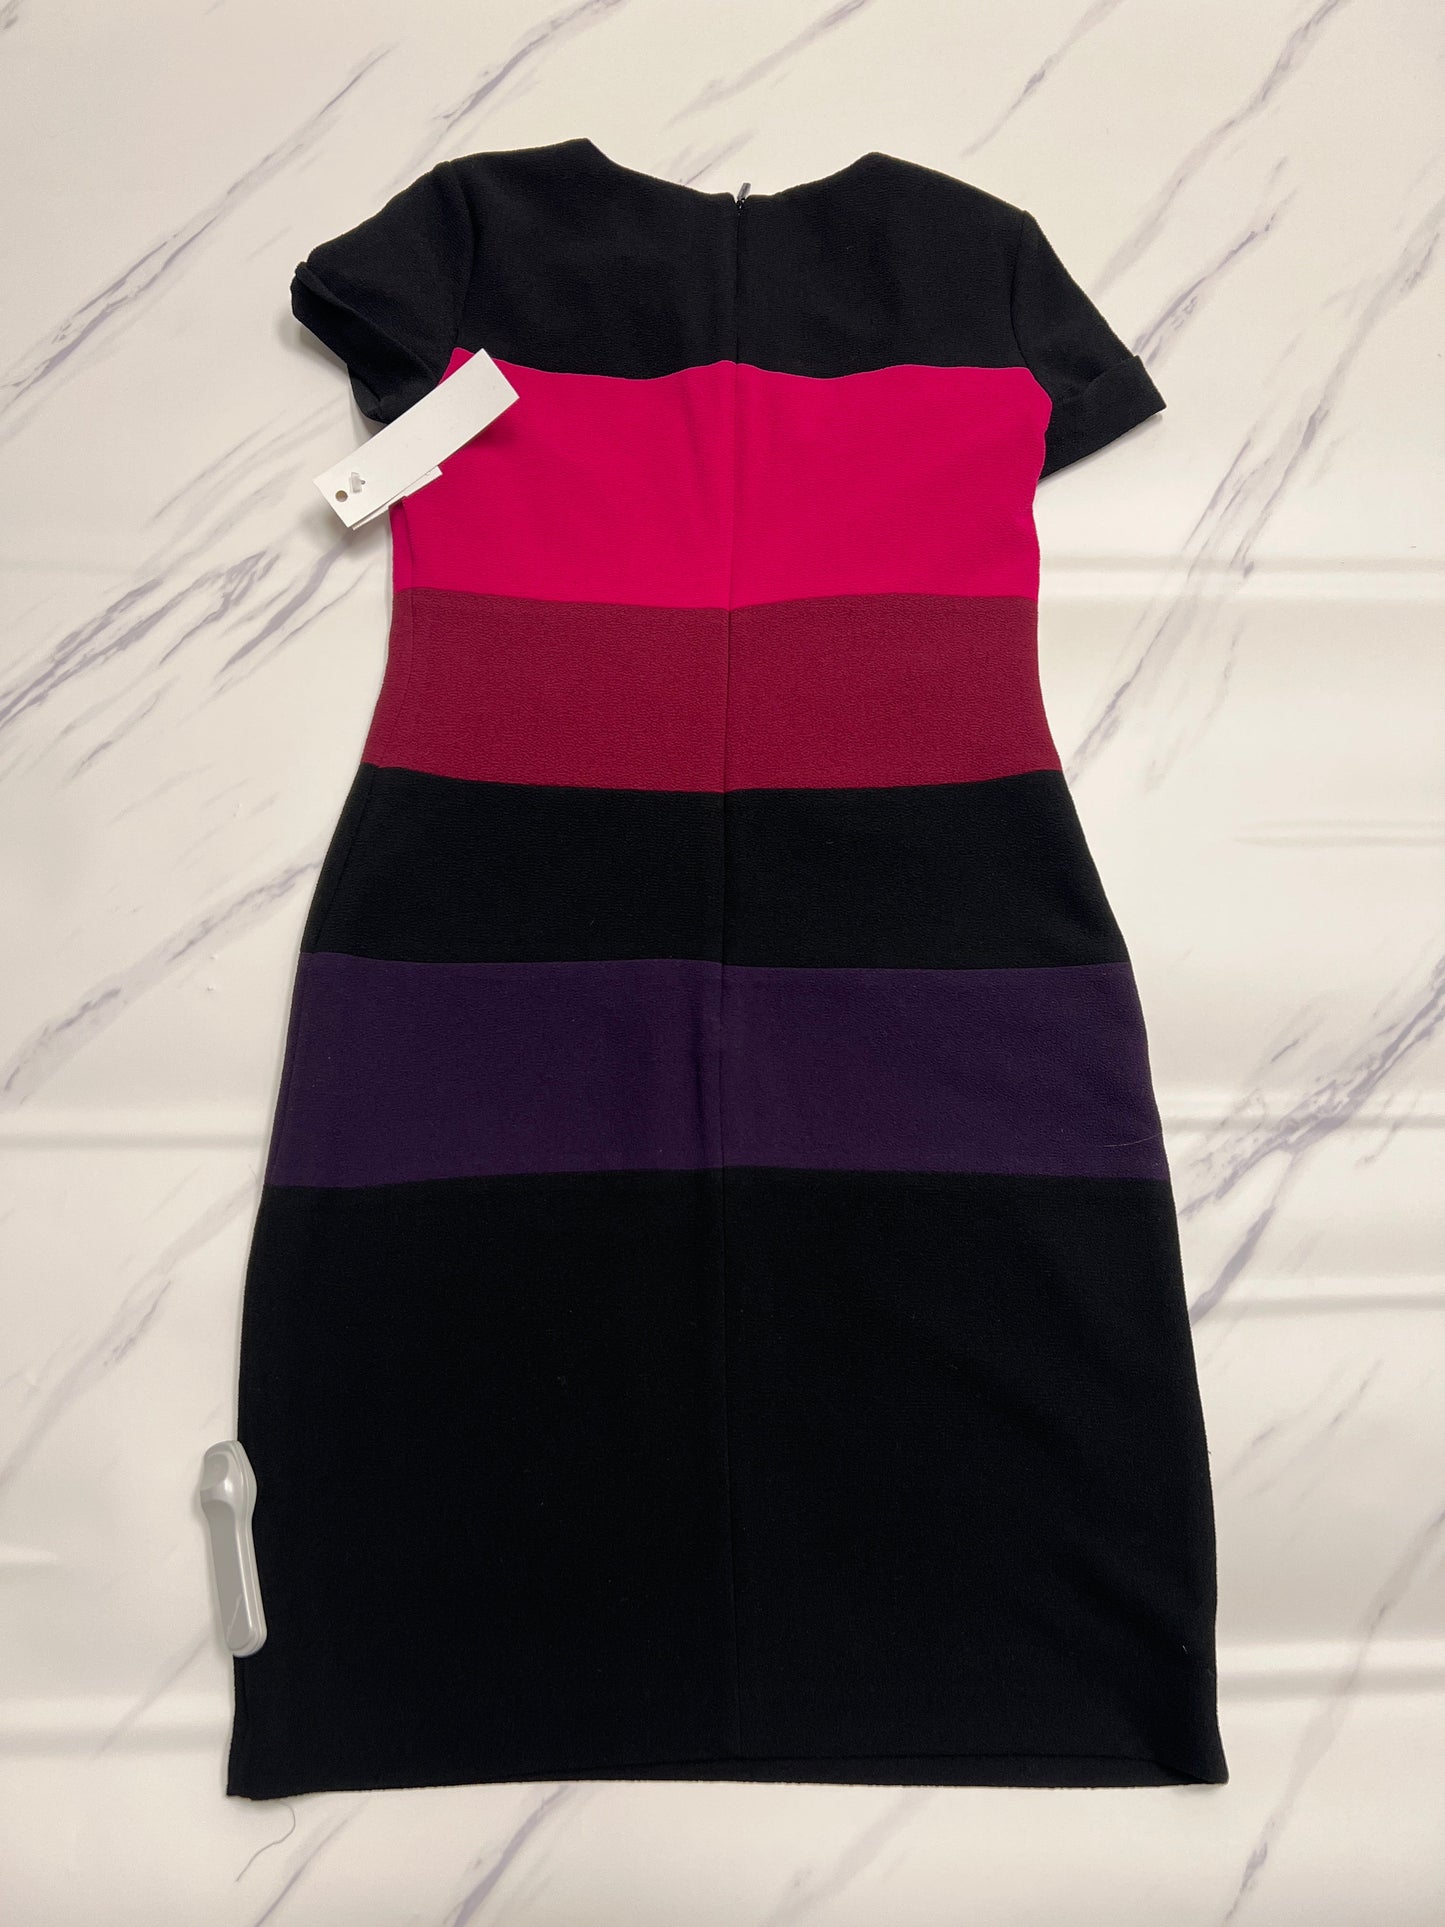 Dress Designer By Karl Lagerfeld  Size: 2